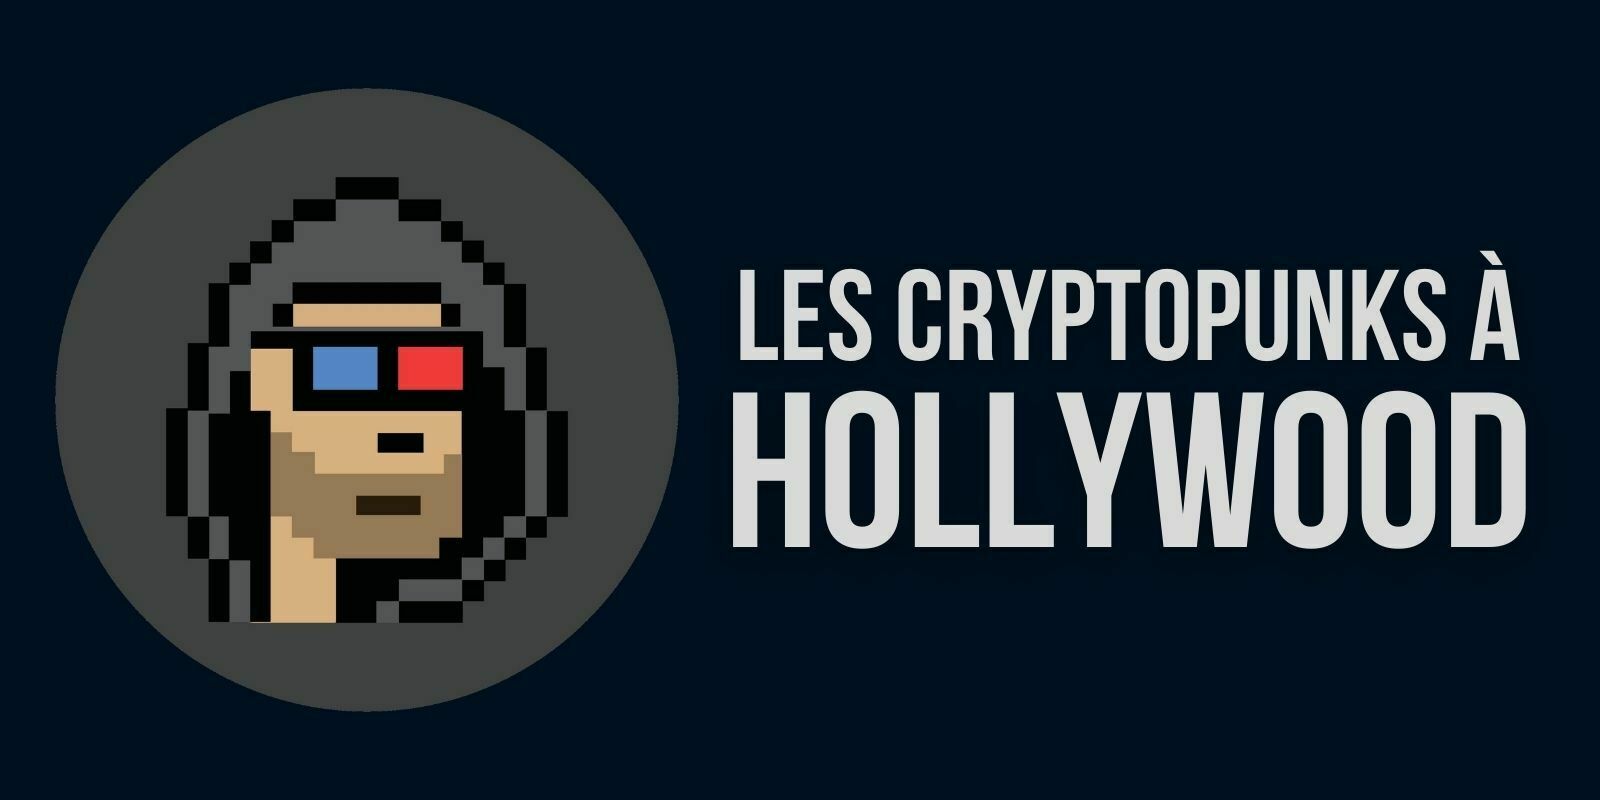 L’entreprise responsable des CryptoPunks signe avec une grande agence hollywoodienne